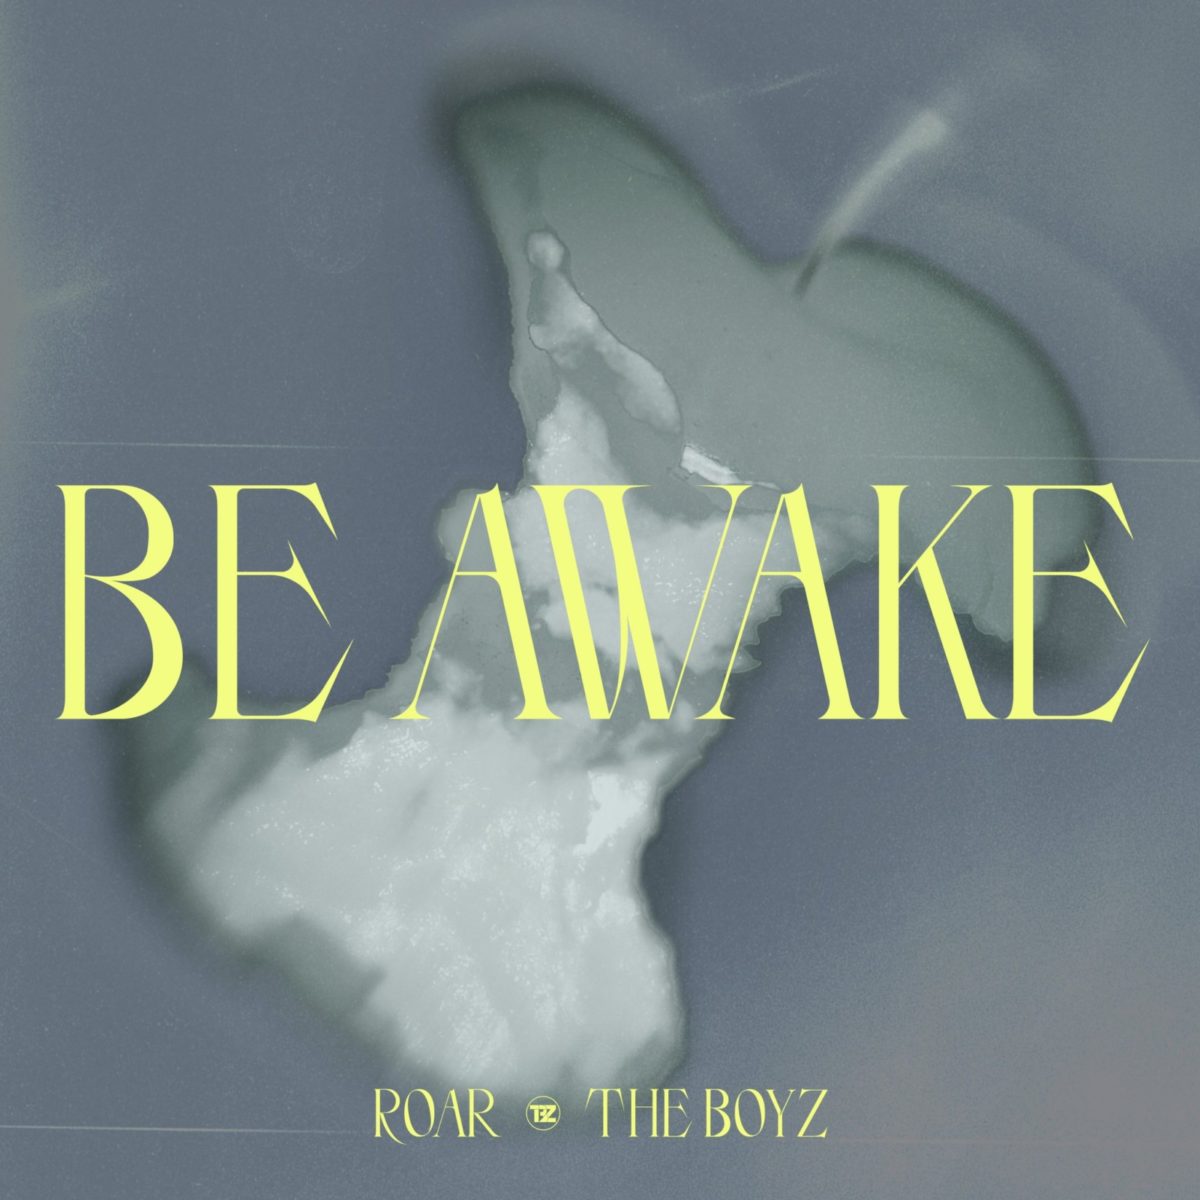 THE BOYZ 8th MINI ALBUM 「BE AWAKE」 THE BOYZ(더보이즈) 「ROAR」